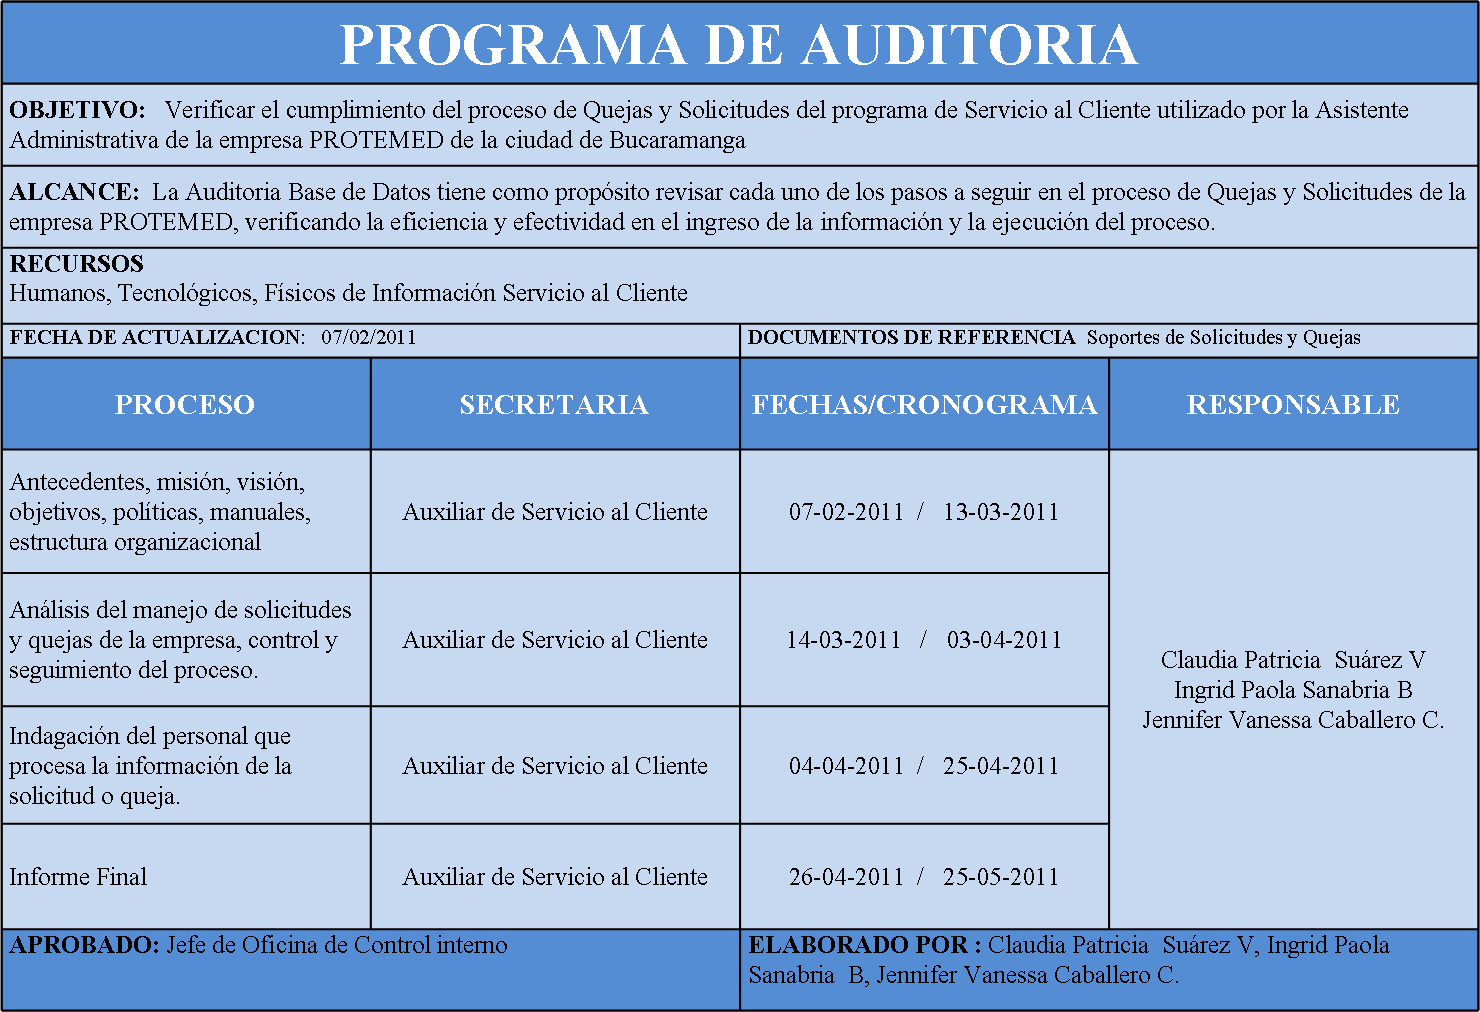 Auditoria De Sistemas Jvcc Programa De Auditoria De Sistemas